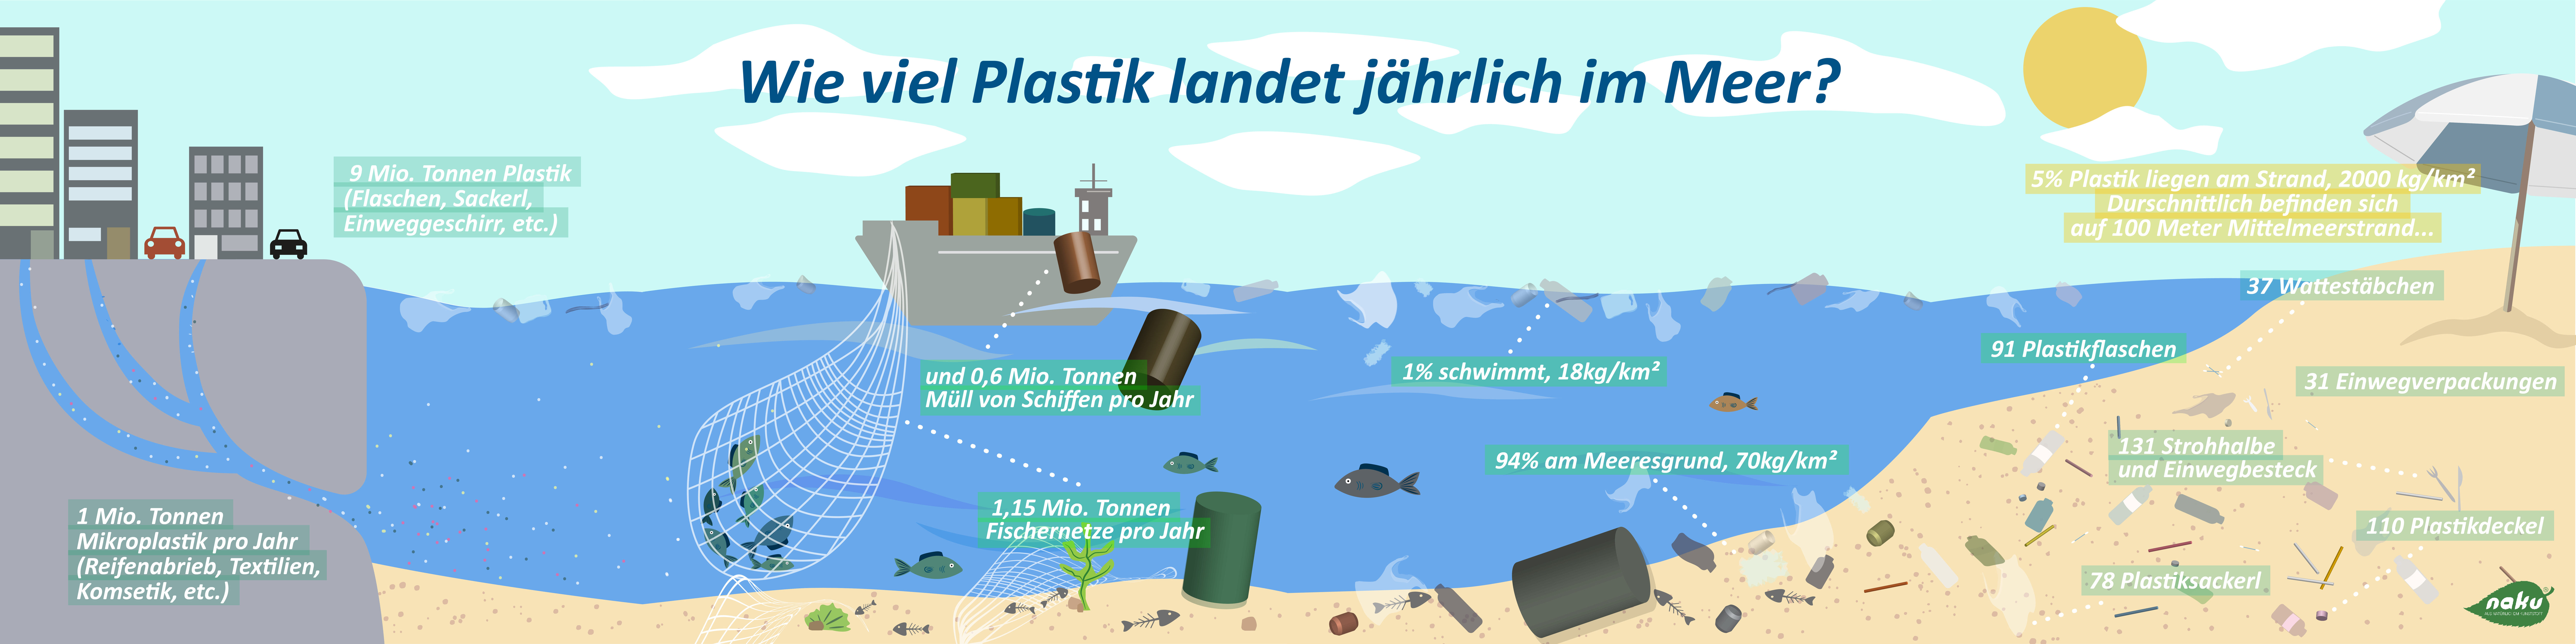 Infografik: Wie viel Plastik landet jährlich im Meet?